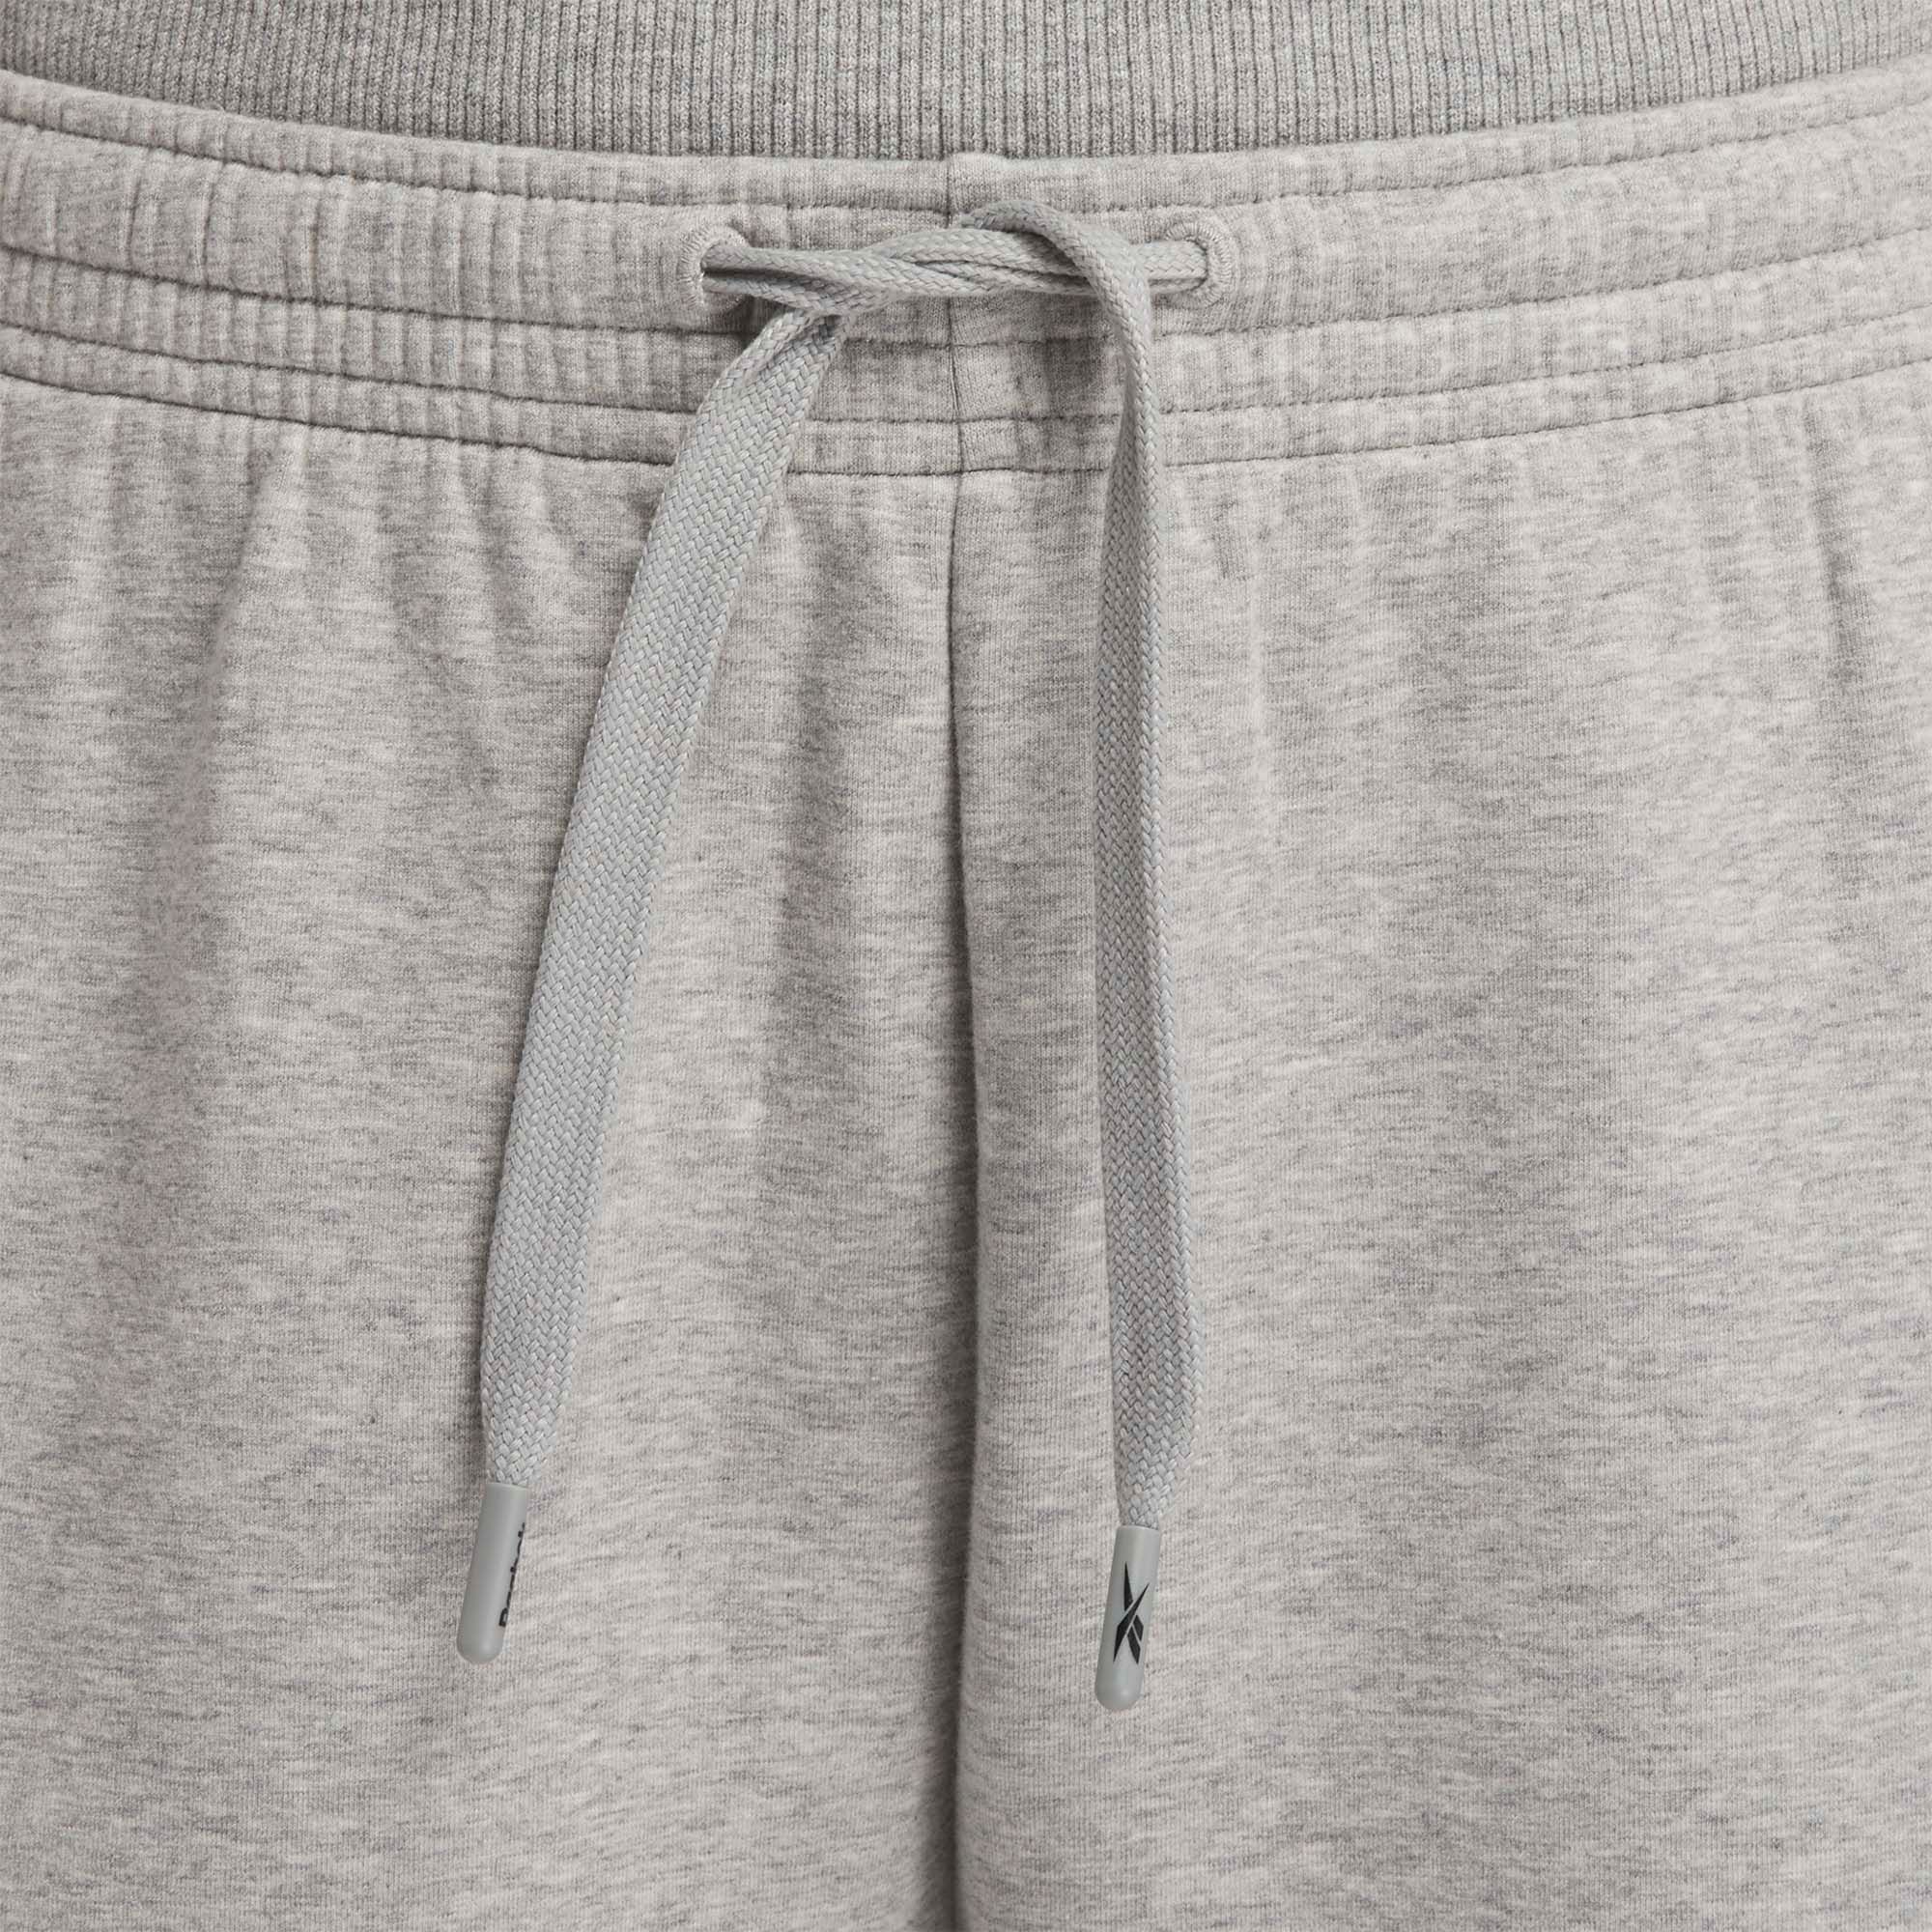 Dick's Sporting Goods Reebok Women's DreamBlend Cotton Knit Pants